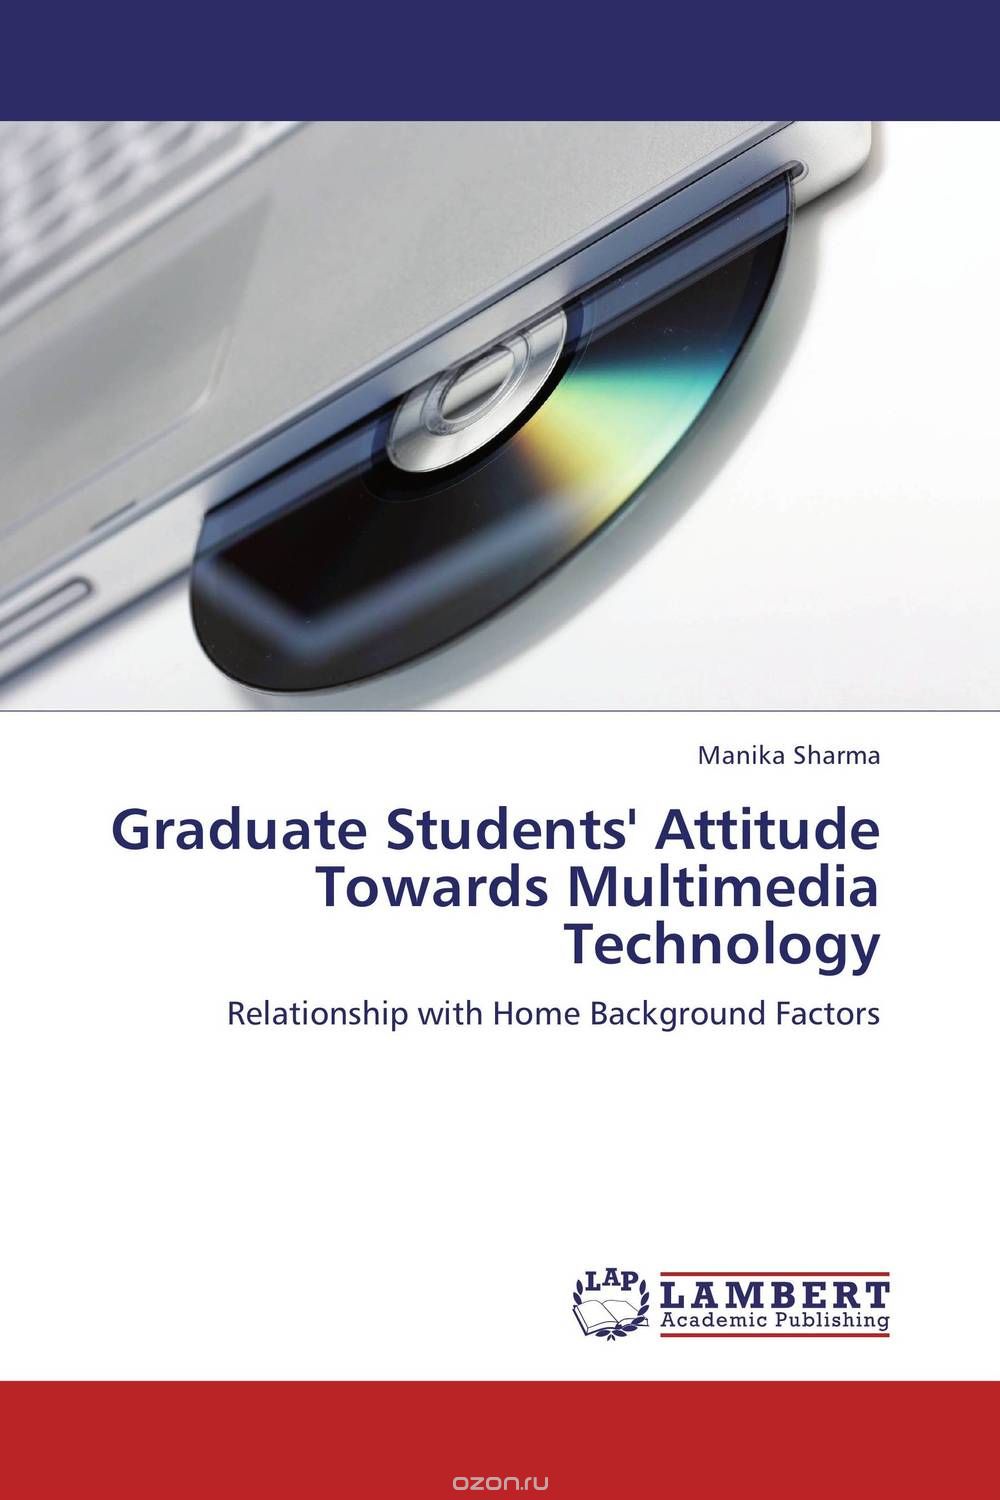 Скачать книгу "Graduate Students' Attitude Towards Multimedia Technology"